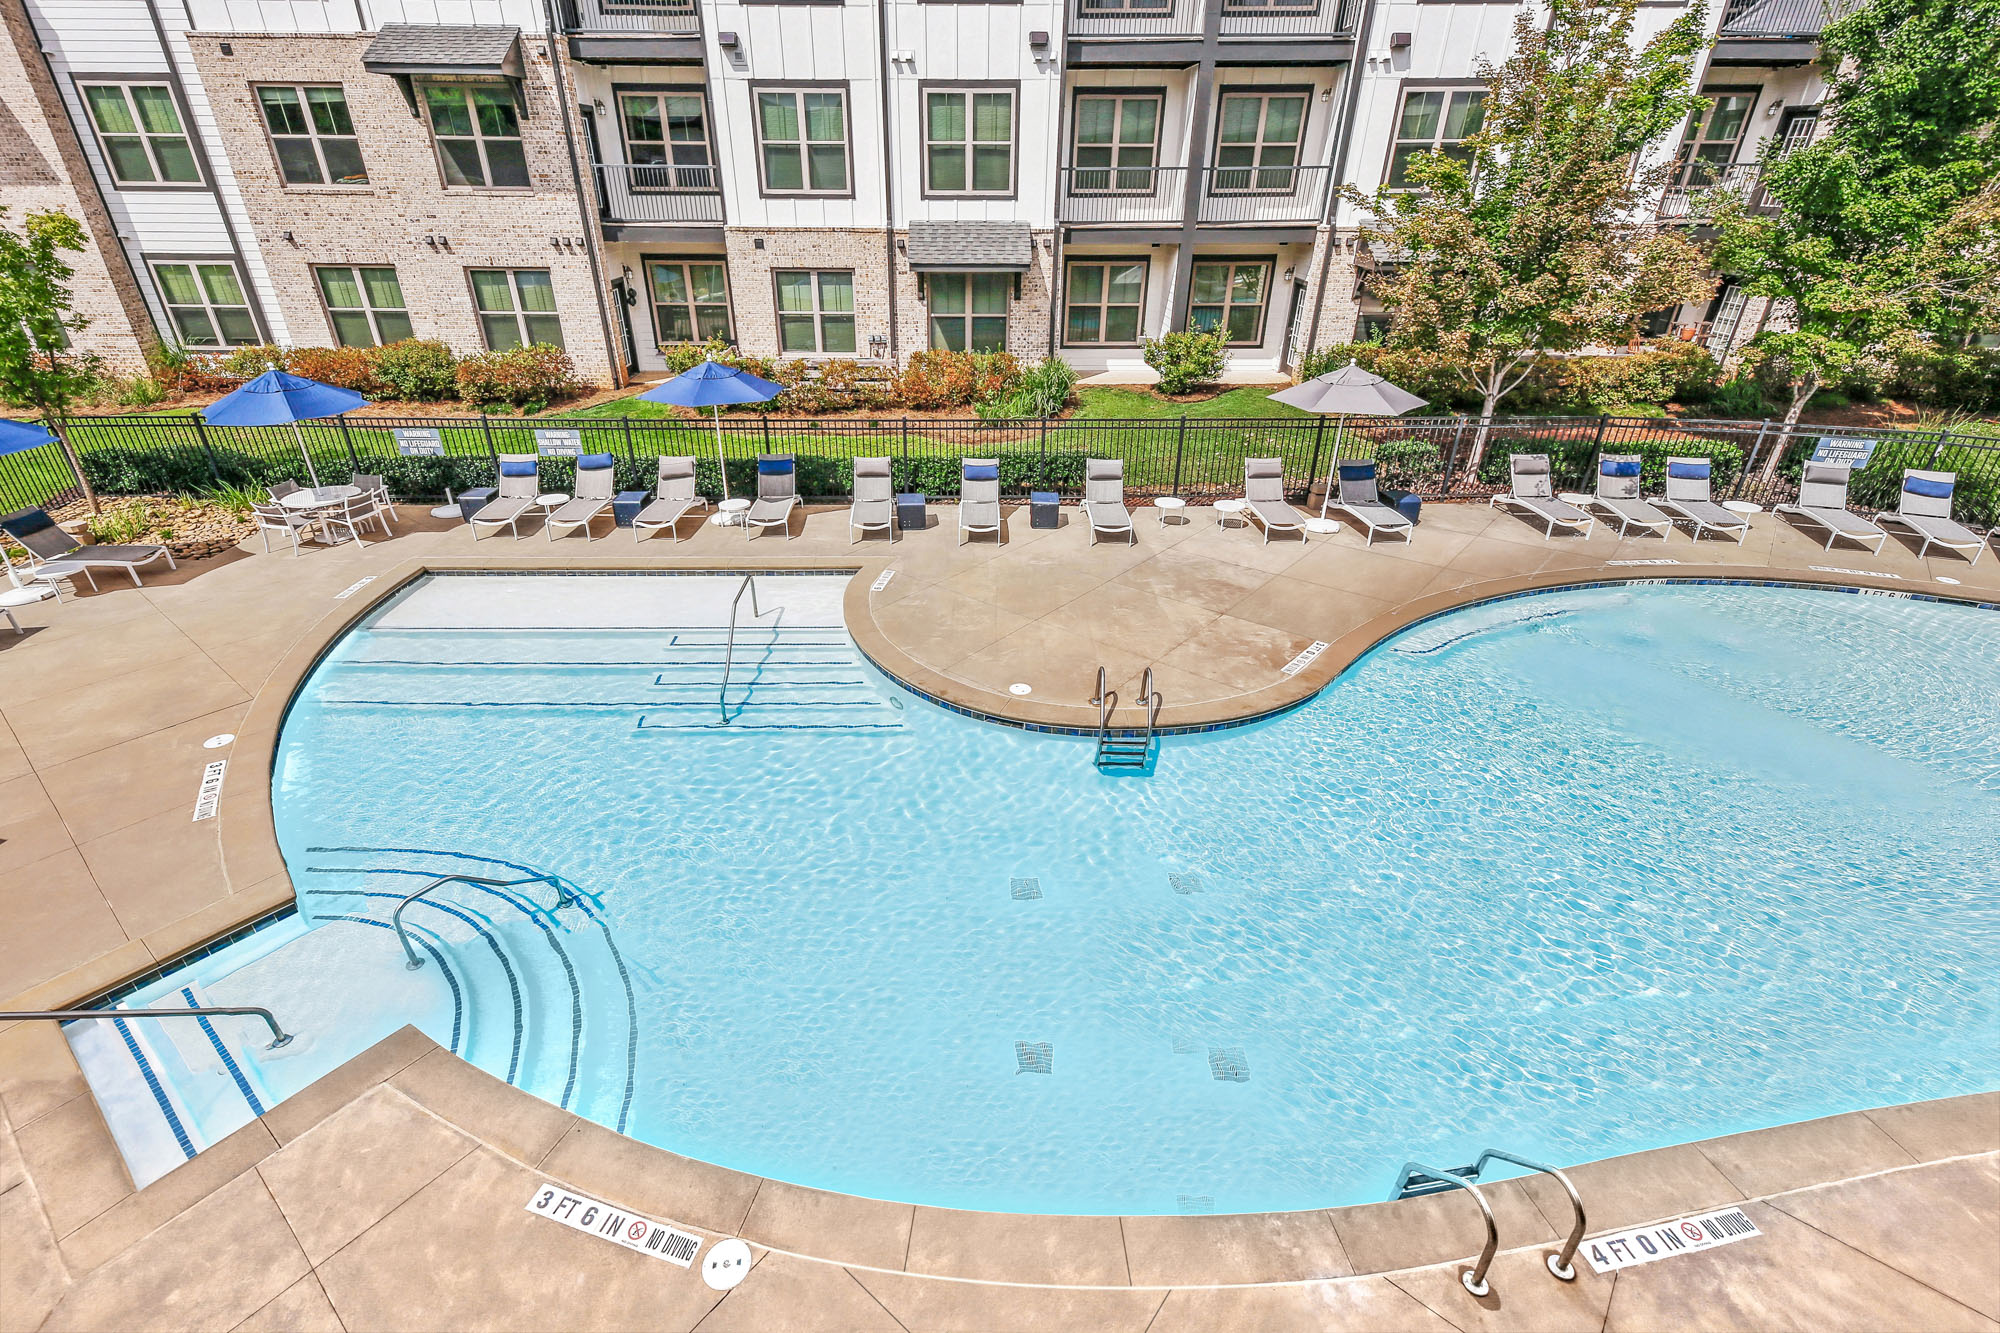 The pool at Park 9 apartments in Atlanta, GA.